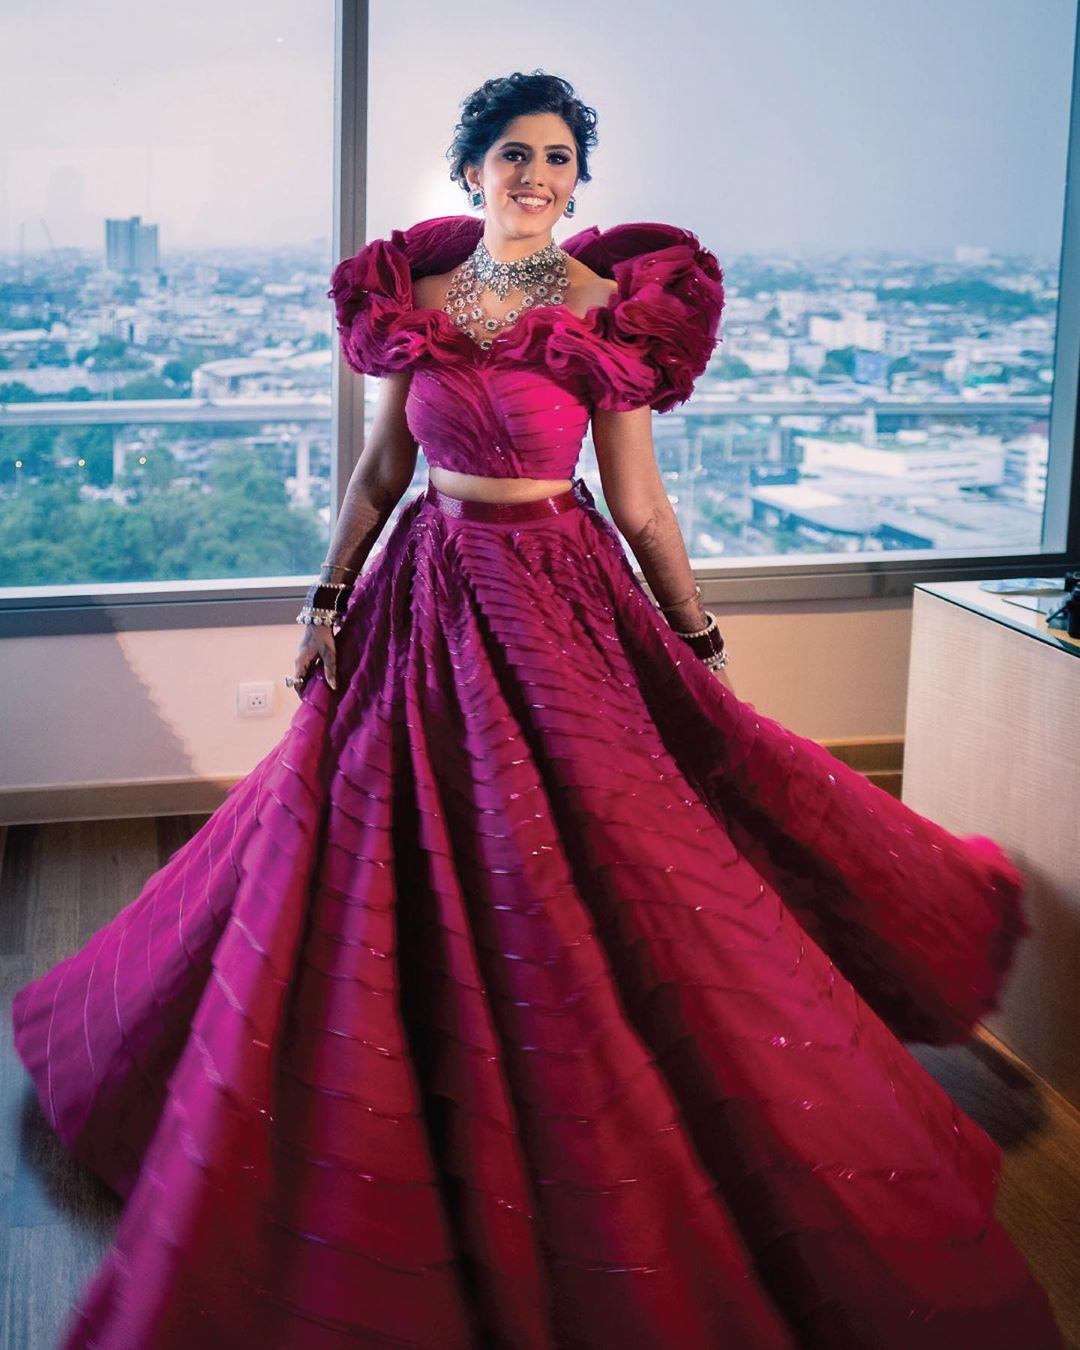 Keerthy Suresh Colourful Looks in Pink Dress